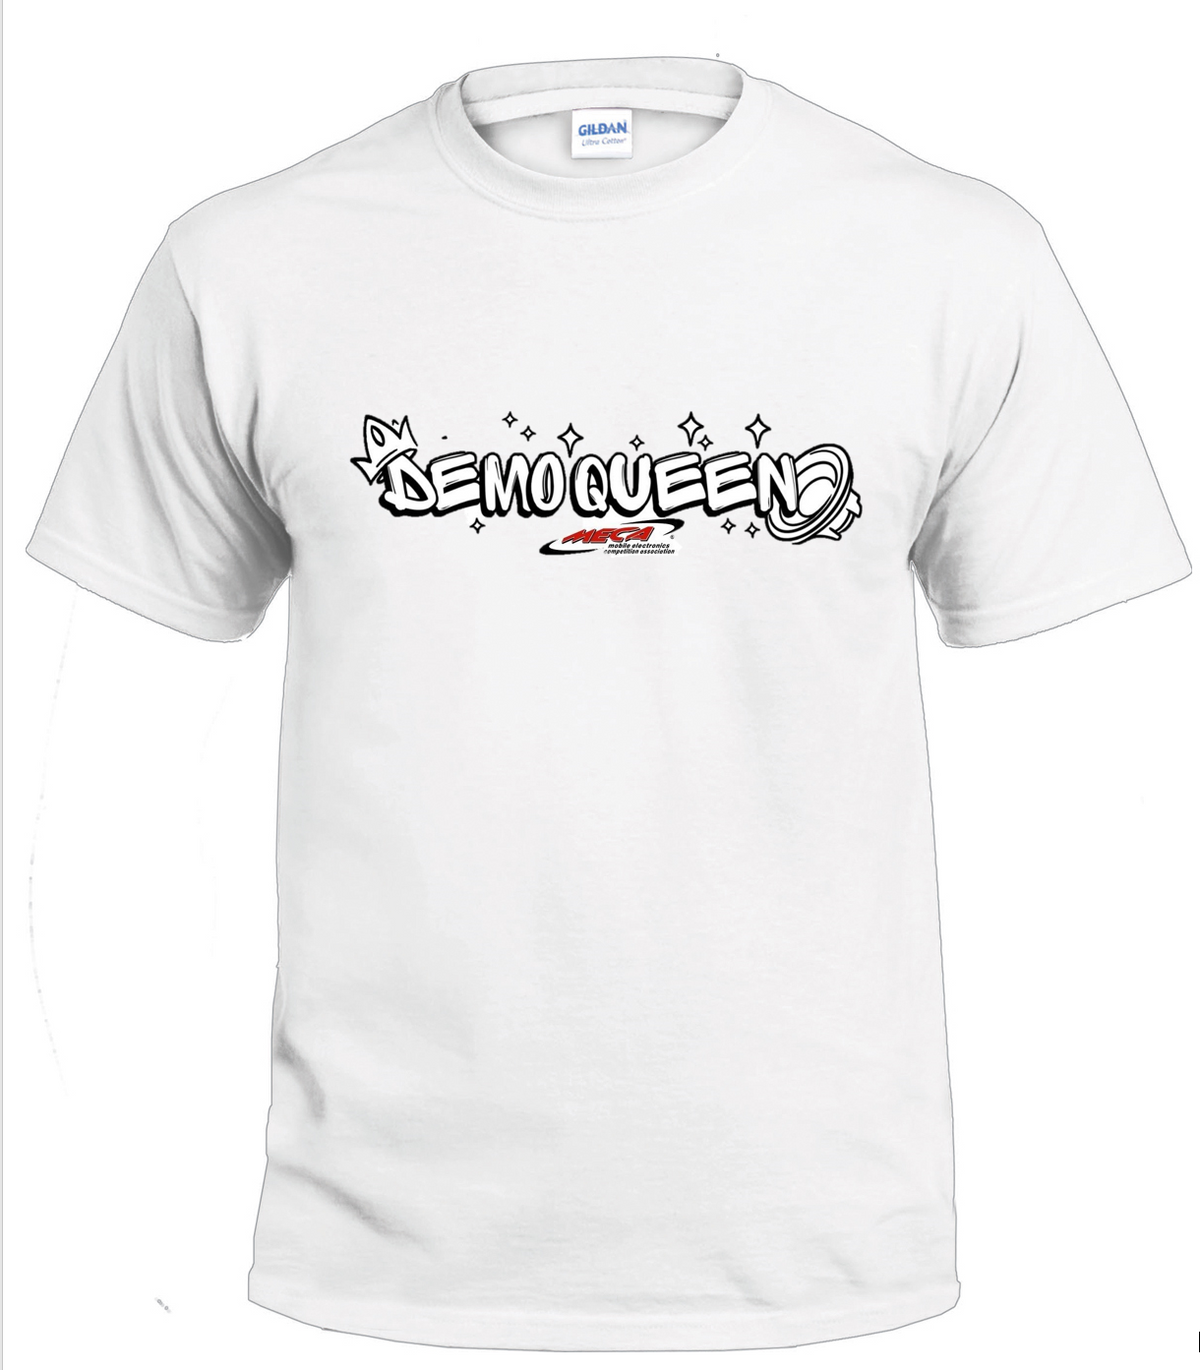 Demo Queen t-shirt